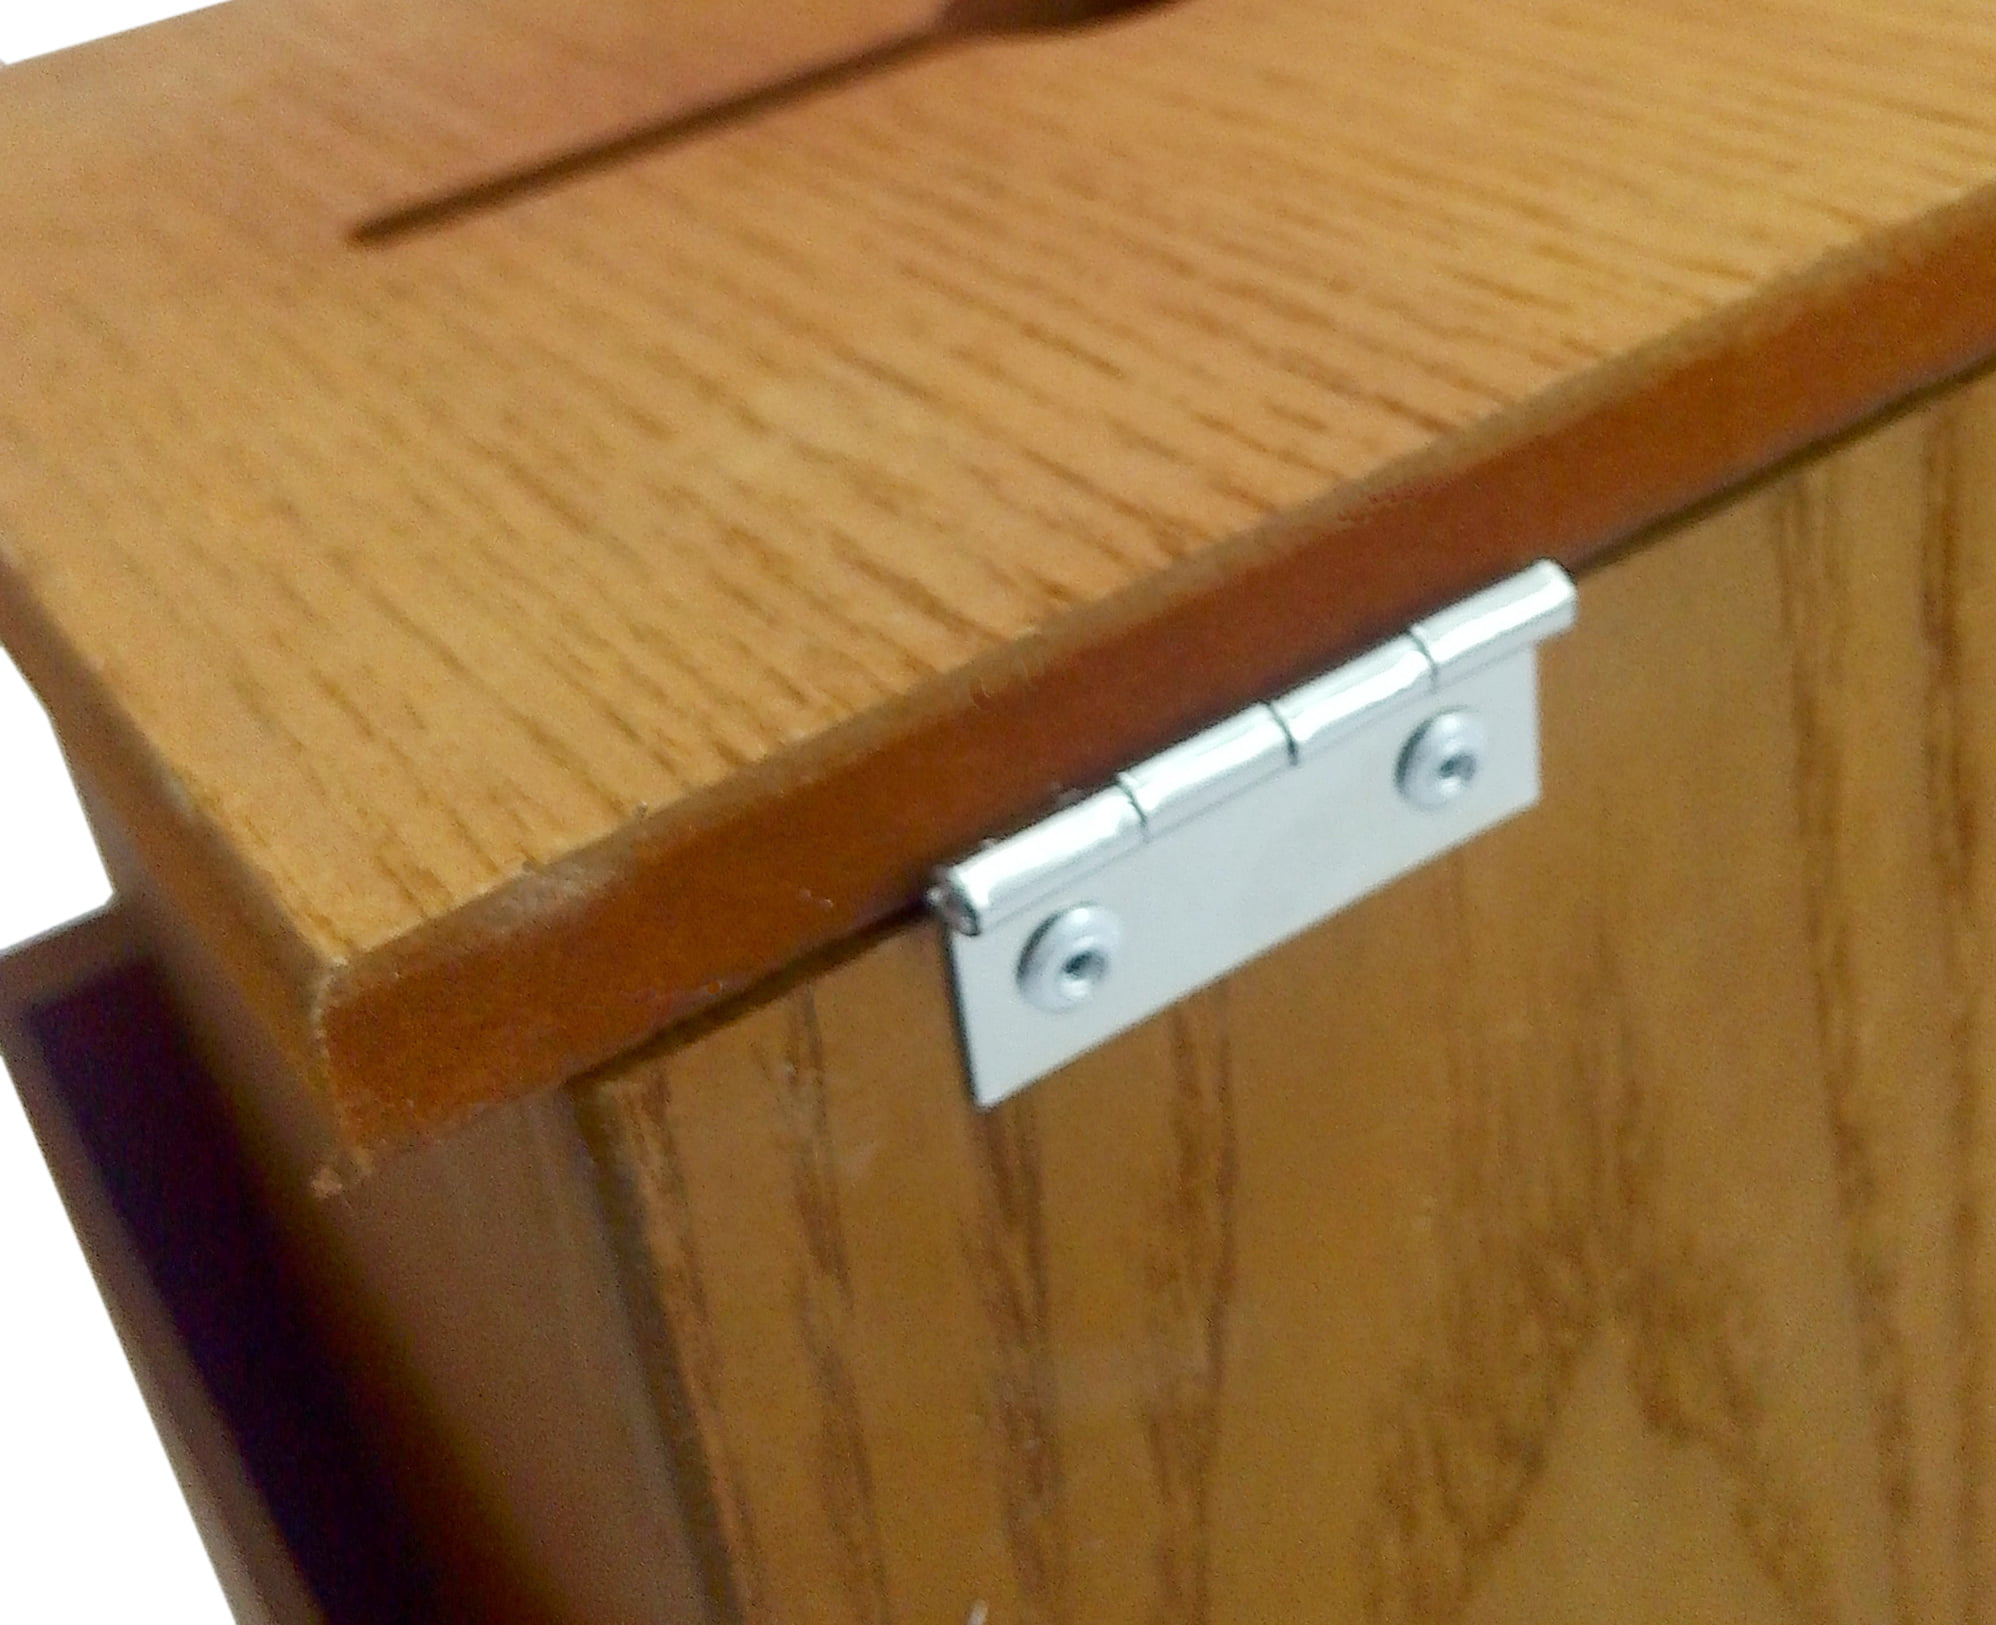 Church offering Box - Donation Box - Wood Box – Country Barn Babe